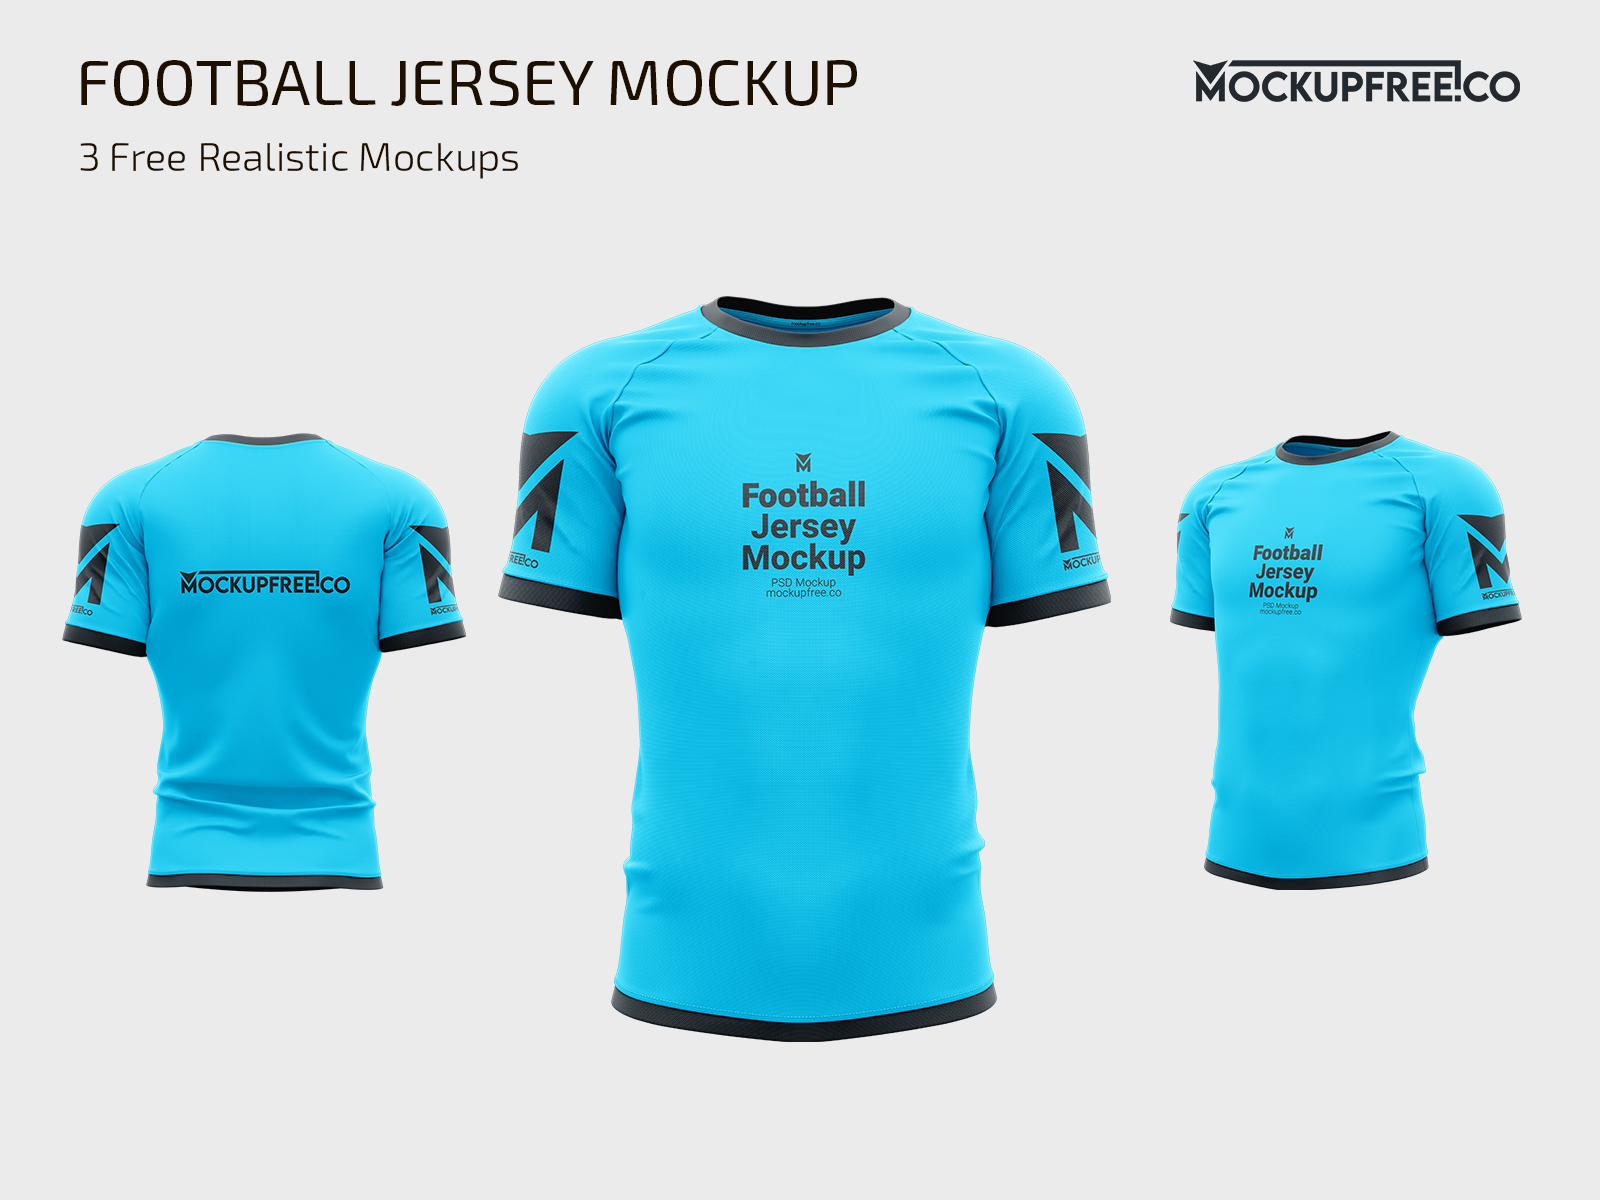 Free Football Jersey Mockup PSD by mockupfree.co on Dribbble